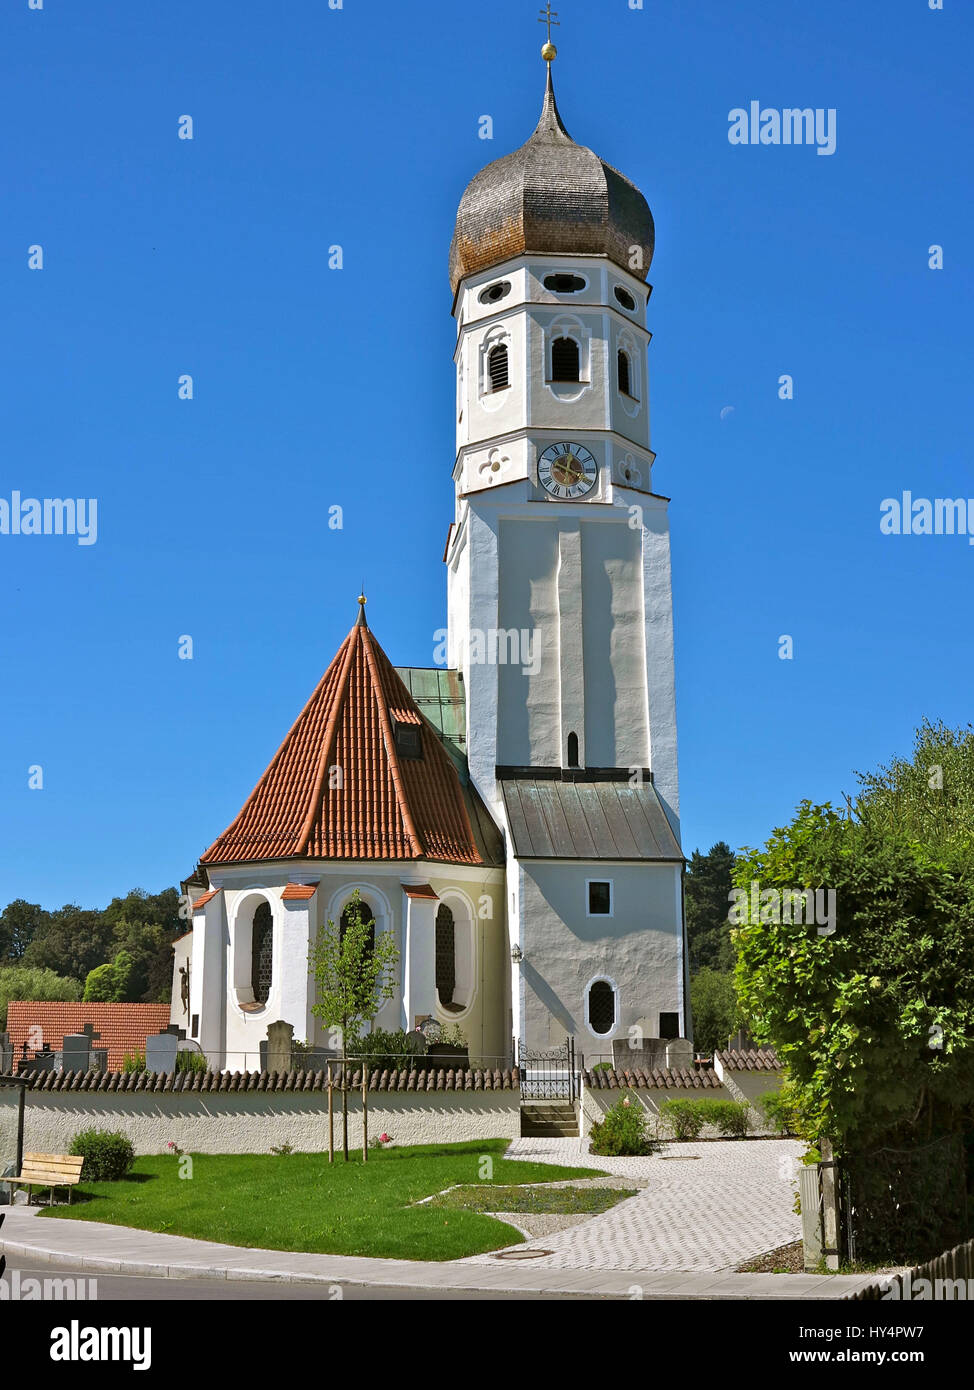 Erling, Chiesa di St. Veit, muro del cimitero, cuspide a bulbo, herpes zoster, clock tower, parco, cielo blu Foto Stock